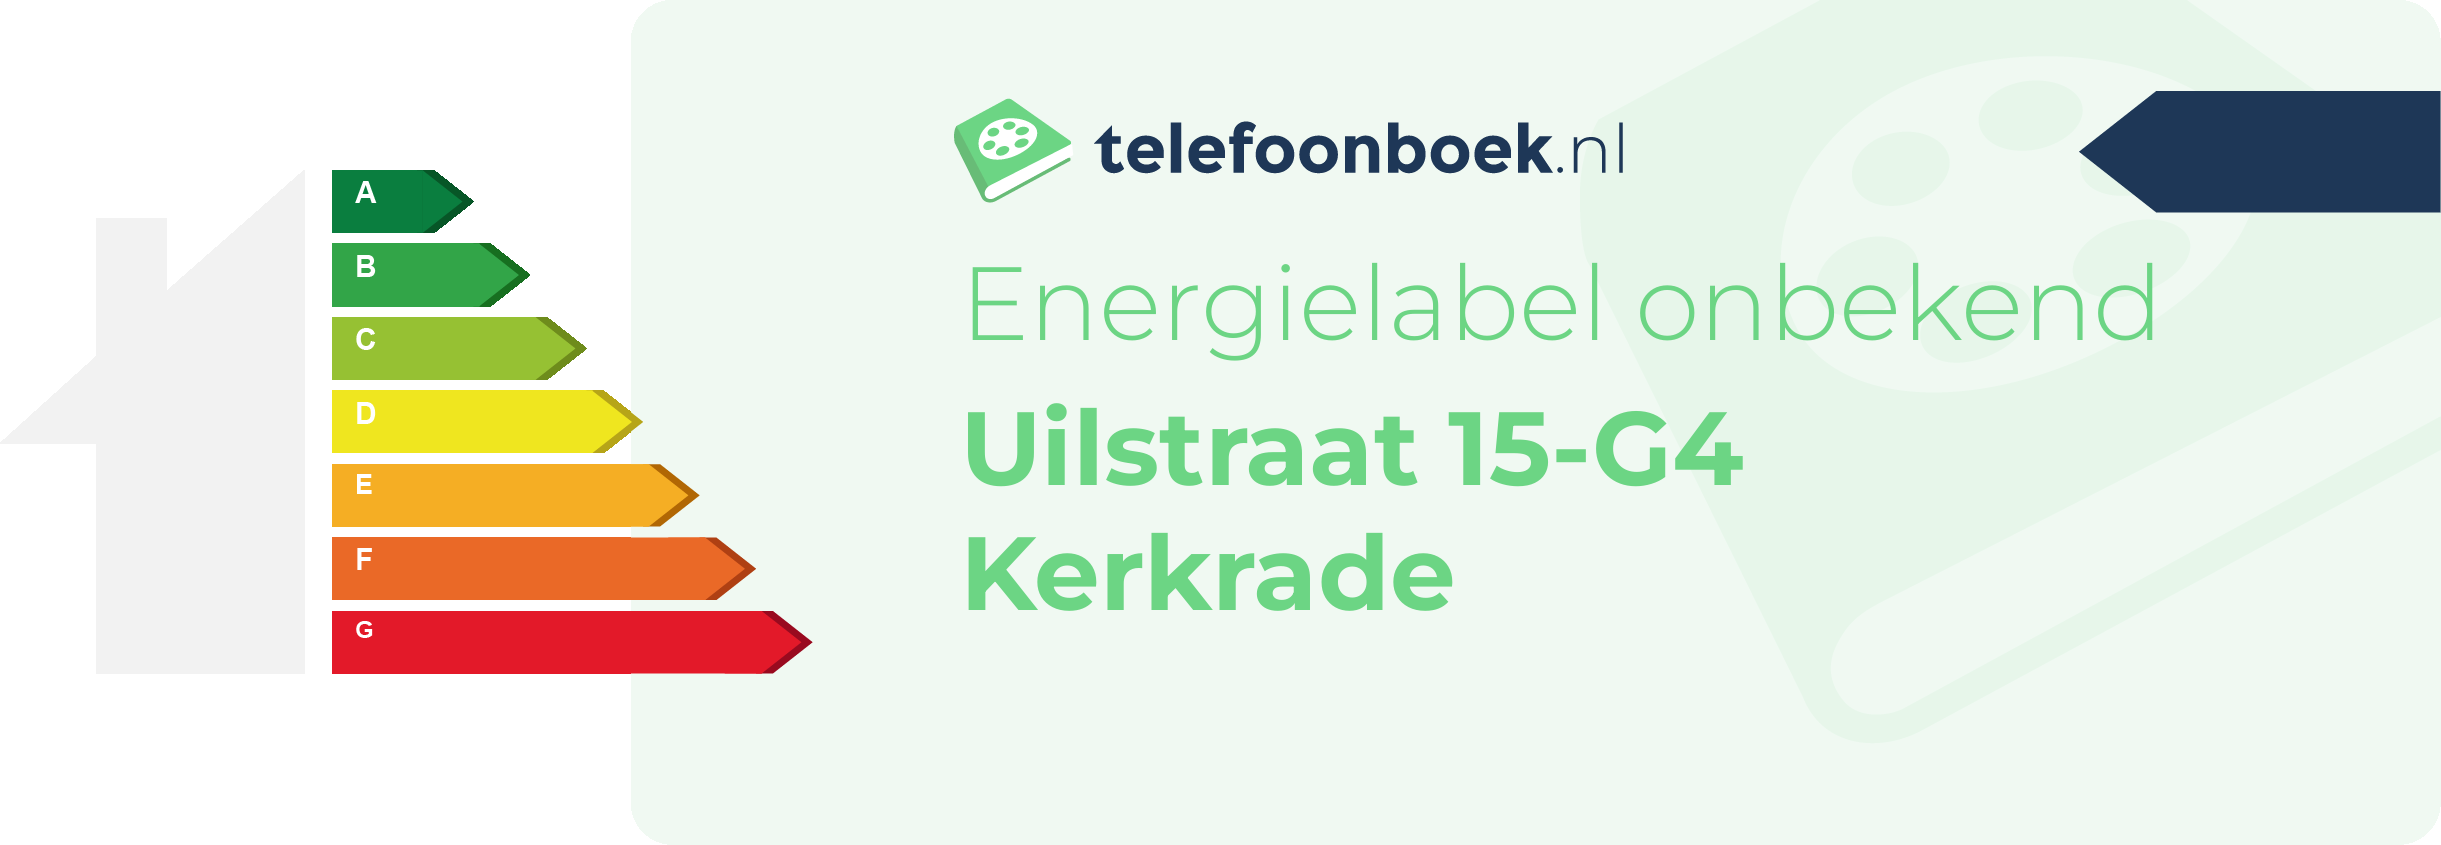 Energielabel Uilstraat 15-G4 Kerkrade